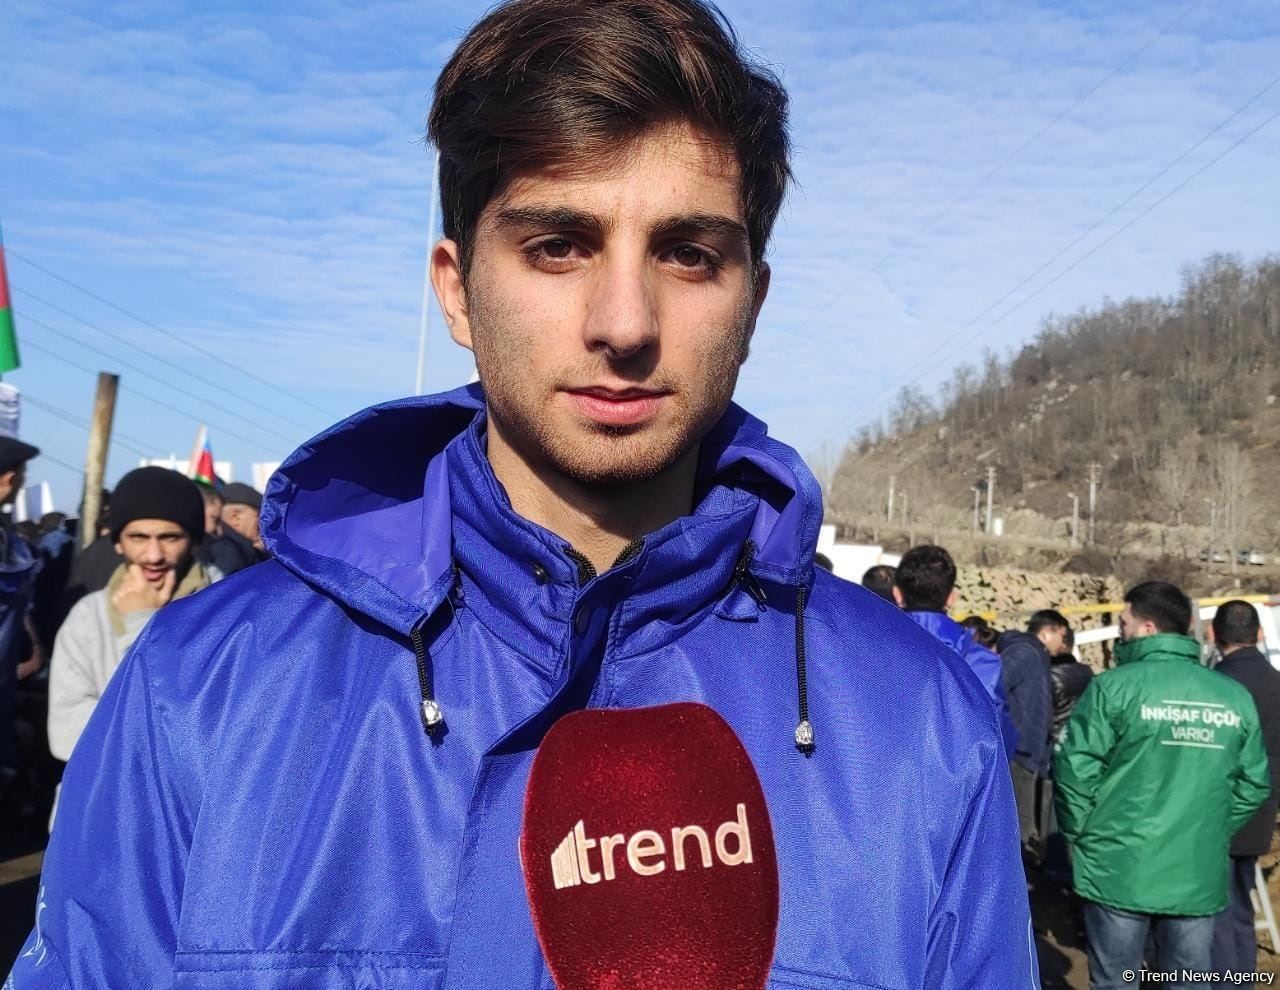 Peaceful protest rally to continue until demands met - Azerbaijani volunteer